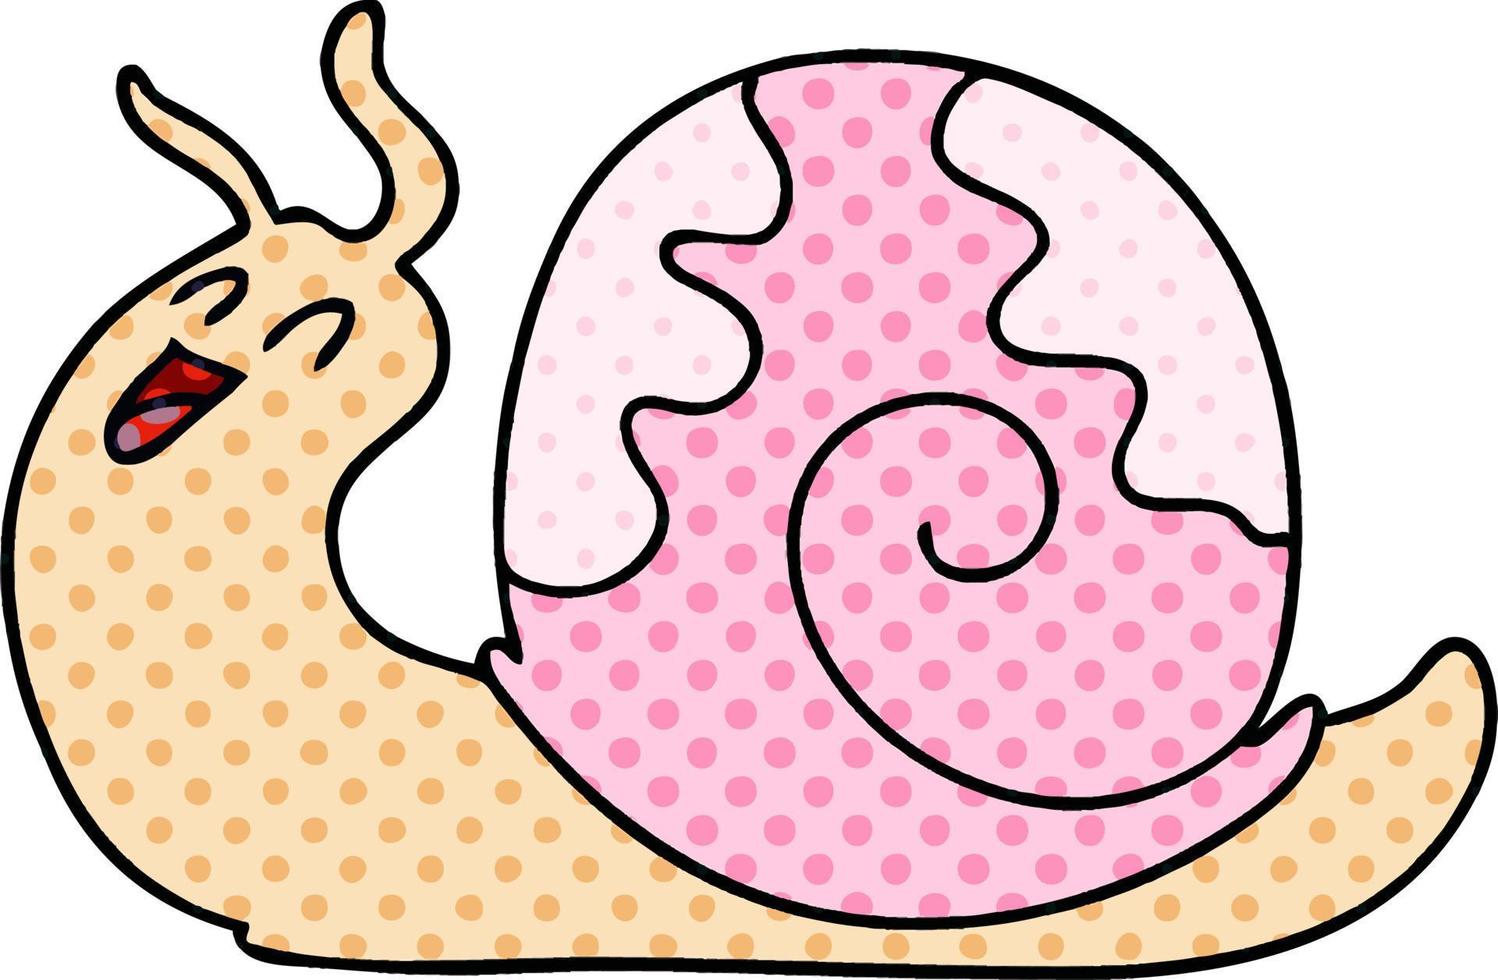 quirky comic book style cartoon snail vector